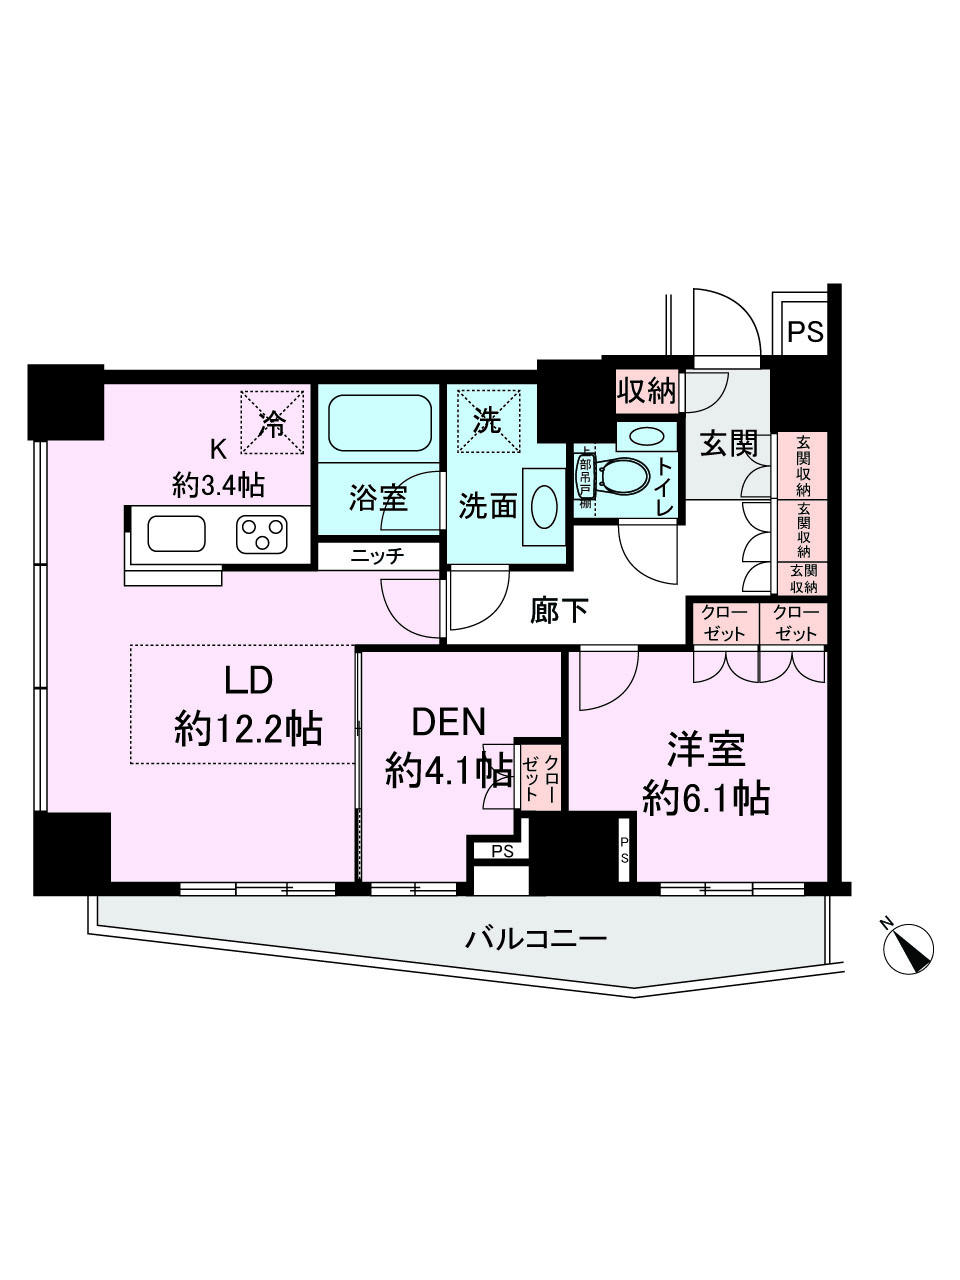 Floor plan. 1LDK + S (storeroom), Price 87,100,000 yen, Occupied area 64.86 sq m , Balcony area 9.8 sq m